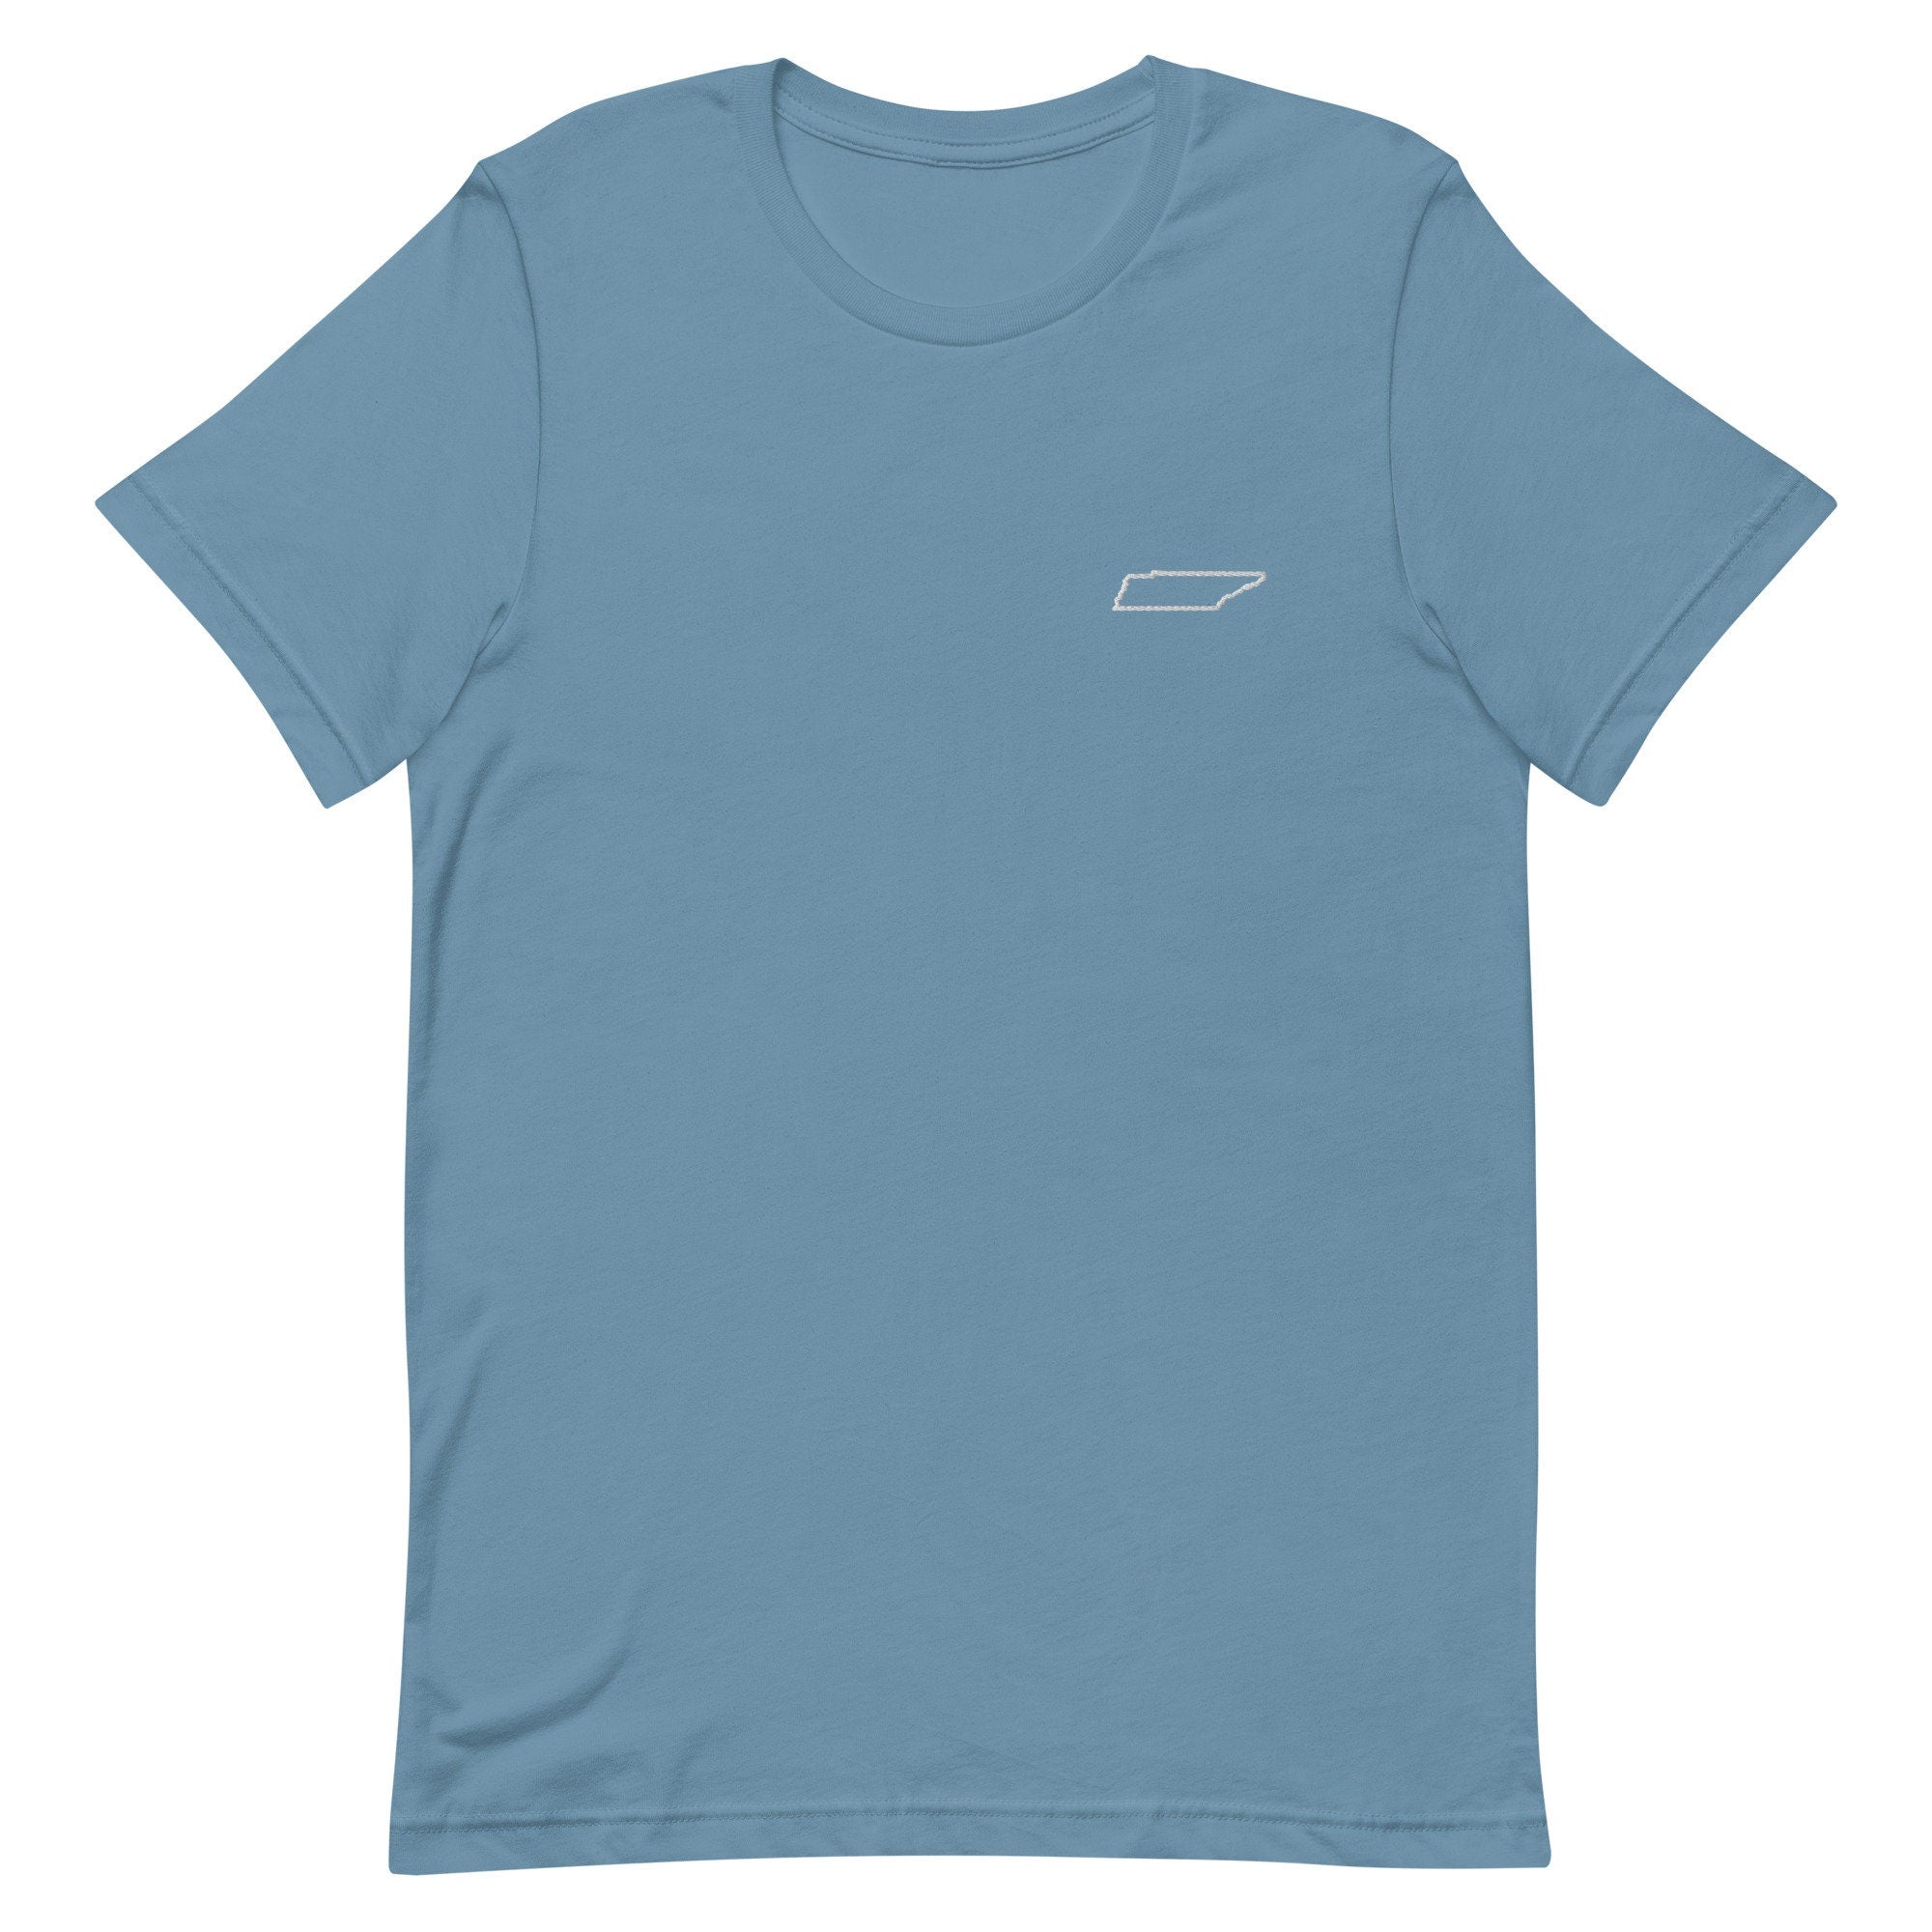 Tennessee Premium Men's T-Shirt, Embroidered Men's T-Shirt Gift for Boyfriend, Men's Short Sleeve Shirt - Multiple Colors